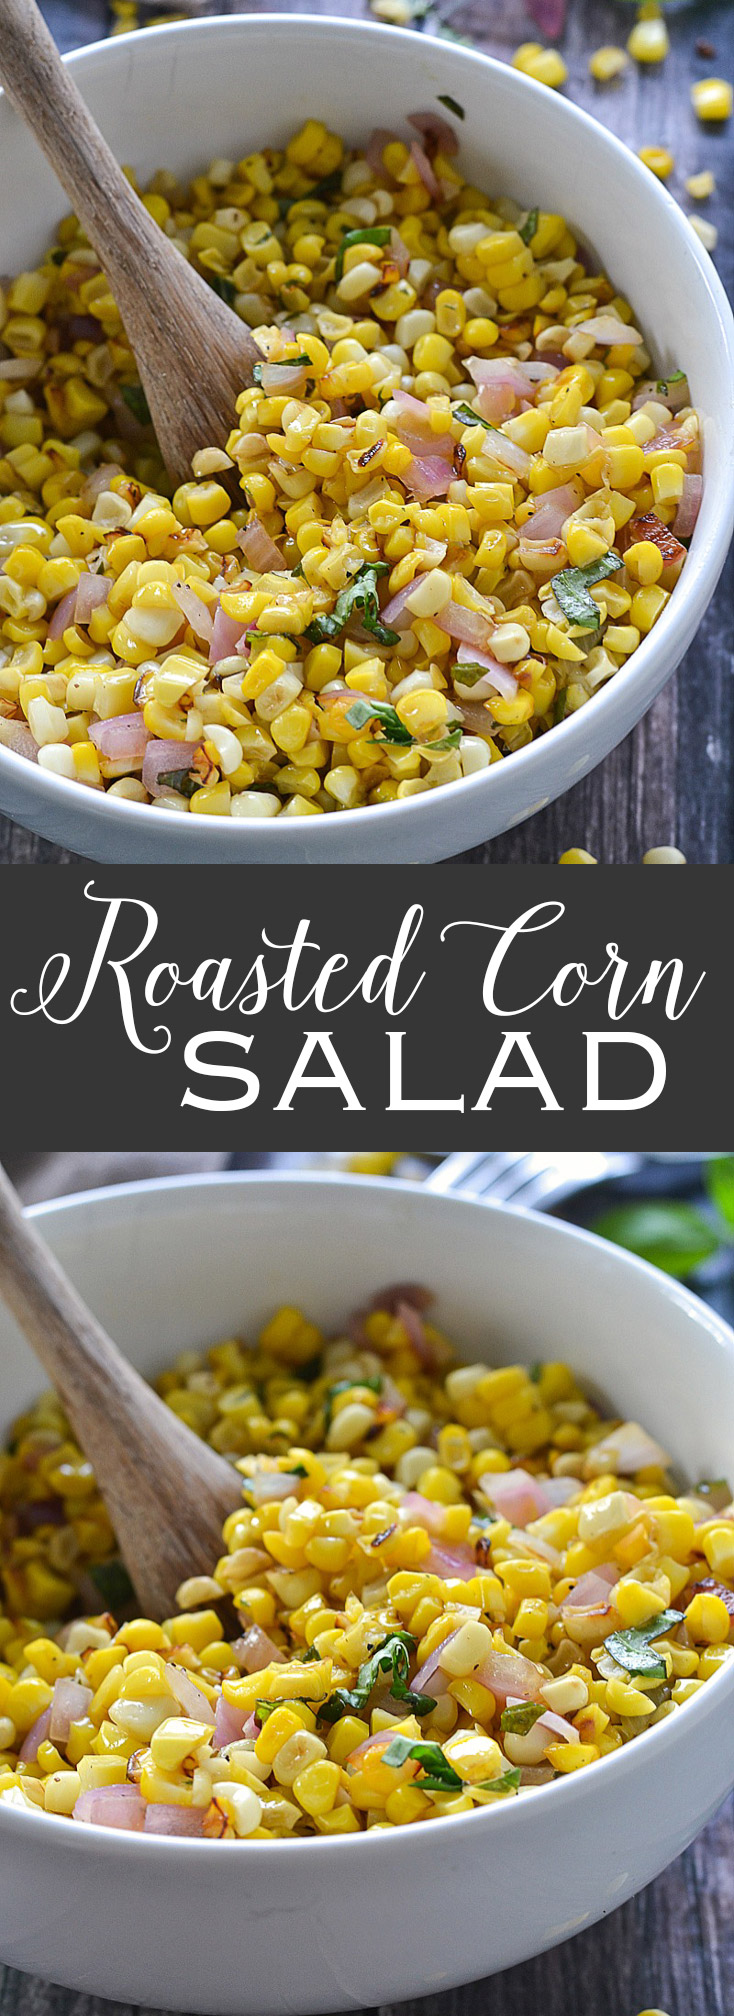 Roasted Corn Salad | www.motherthyme.com